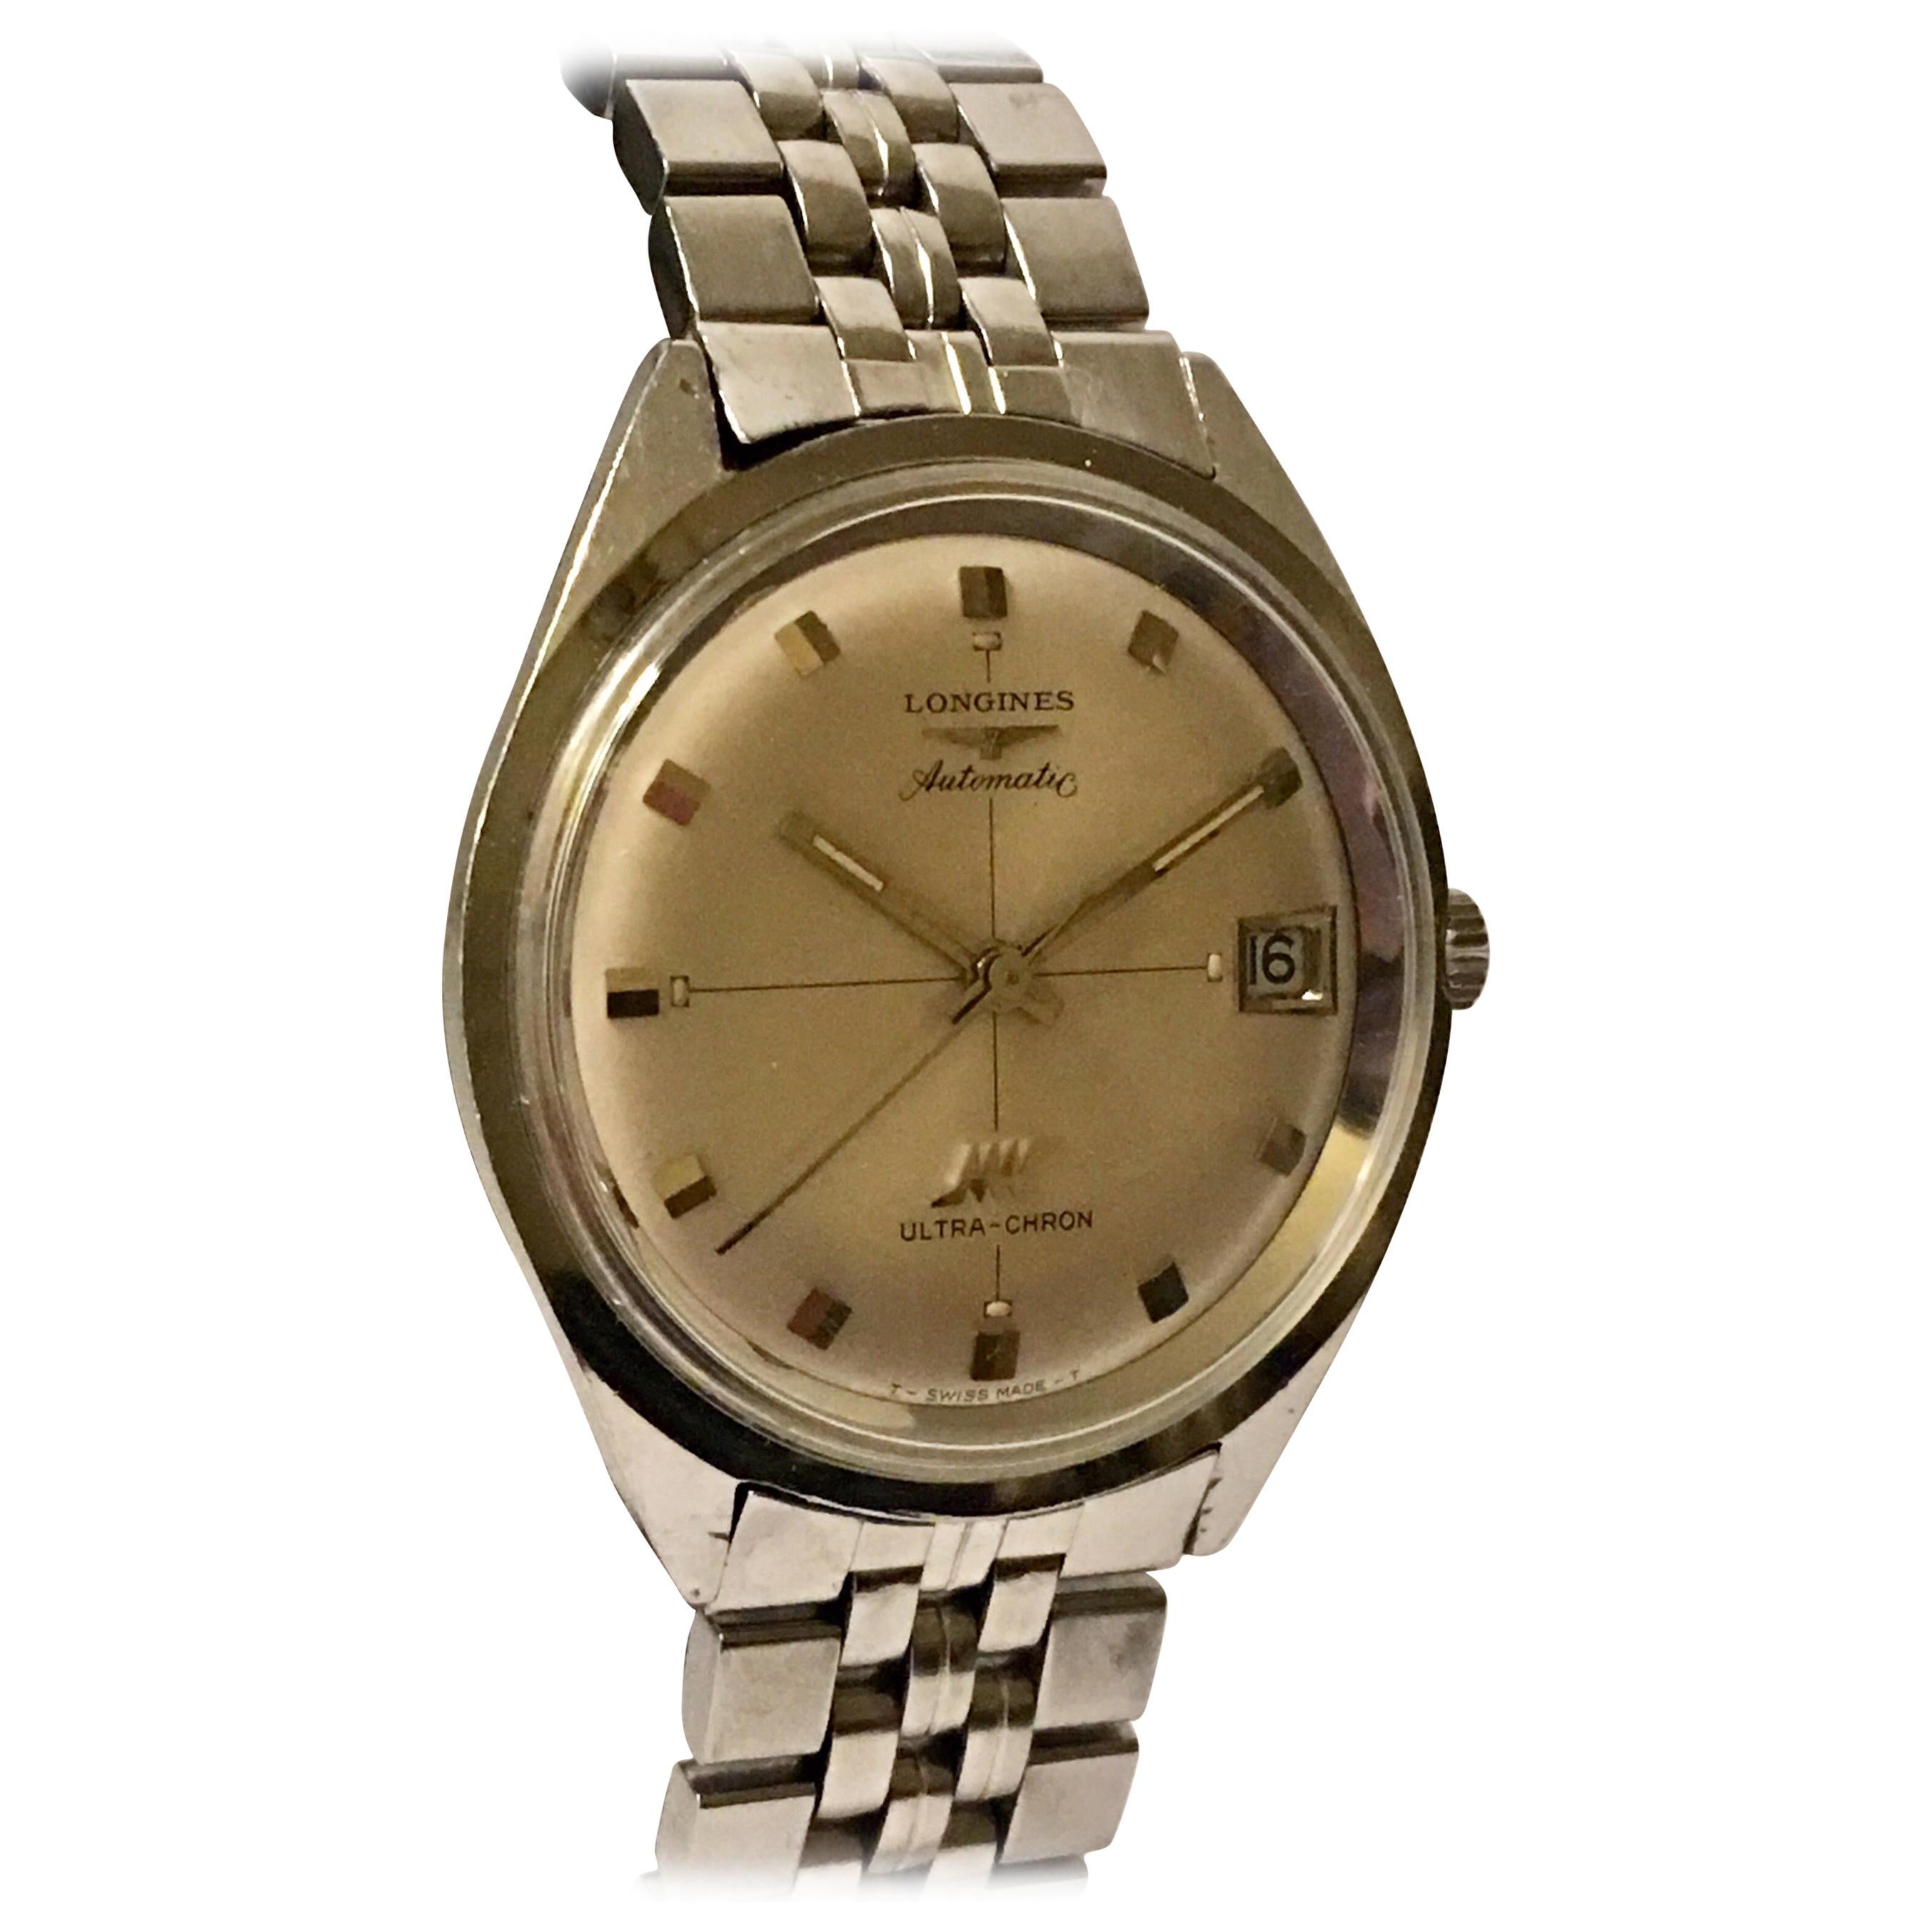 Vintage 1970s Longines Automatic Ultra-Chron Wristwatch For Sale